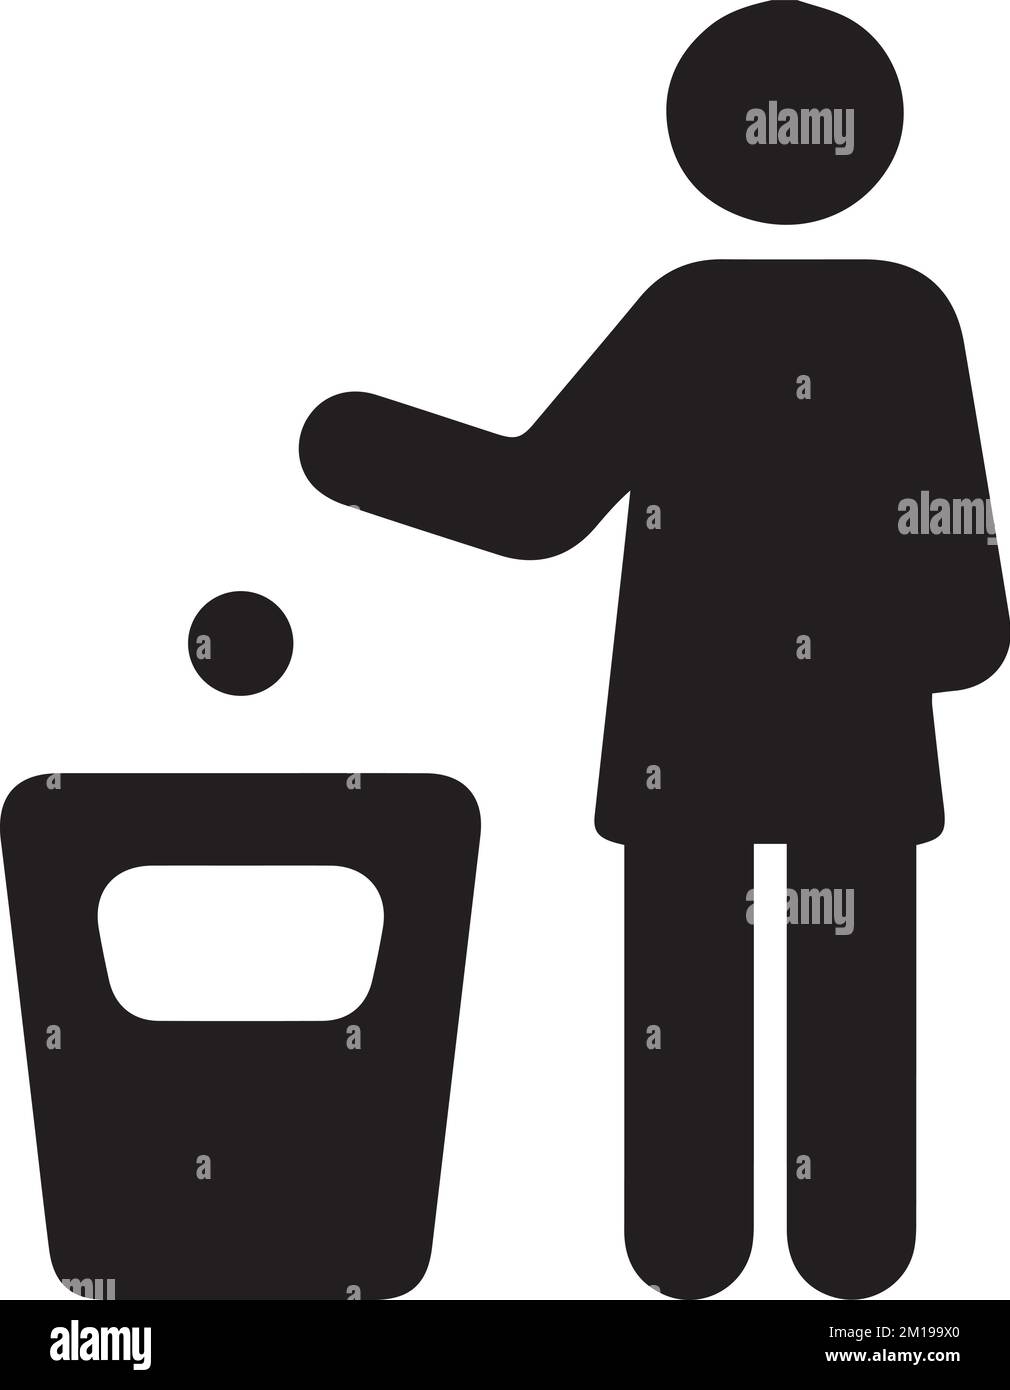 Müllzeichen, Mülltonnen, Papierkörbe, Recycling-Symbol, Recycling-Behälter, Symbol für Müllrecycling Stock Vektor